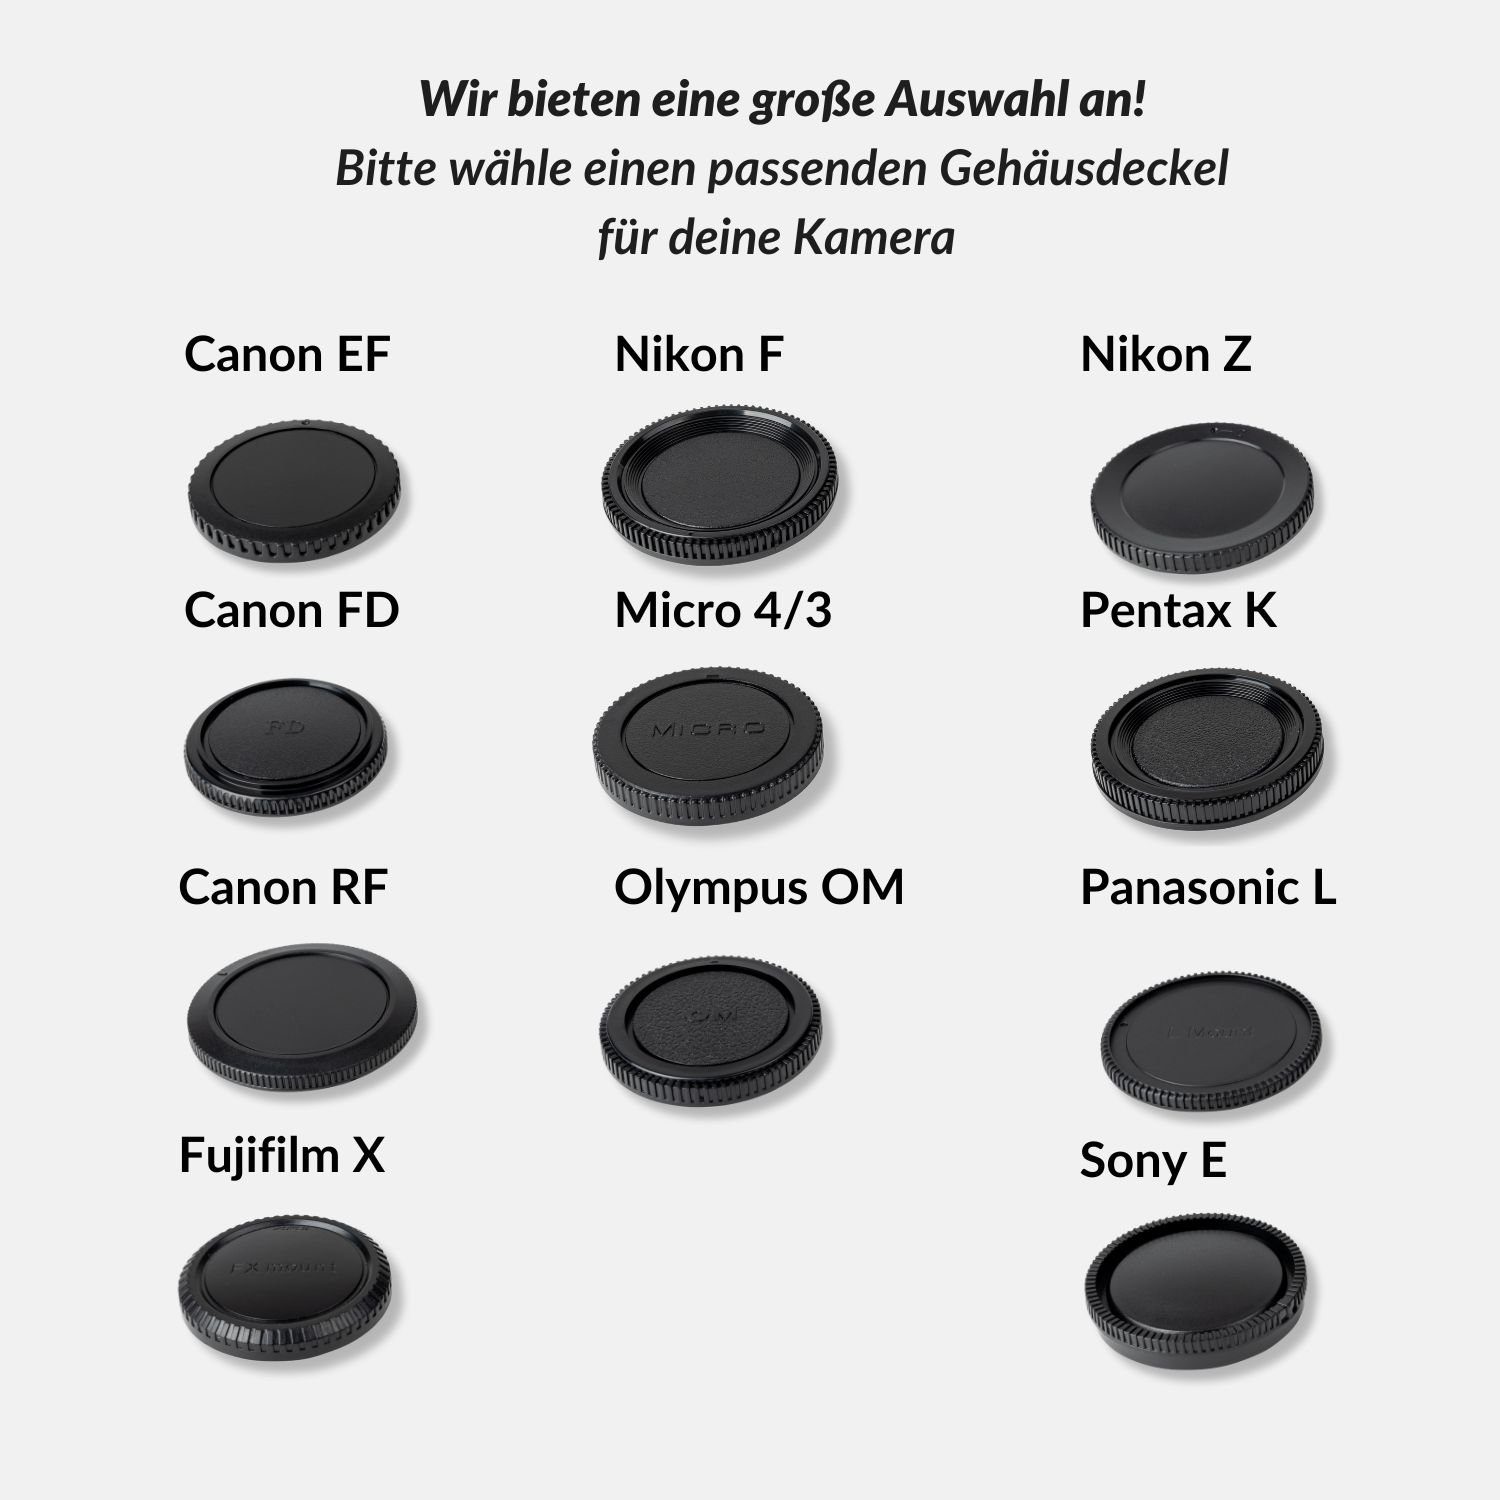 Gehäusedeckel X-Bajonett, Lens-Aid für DSLR, Body Systemkamera Fujifilm Cap,